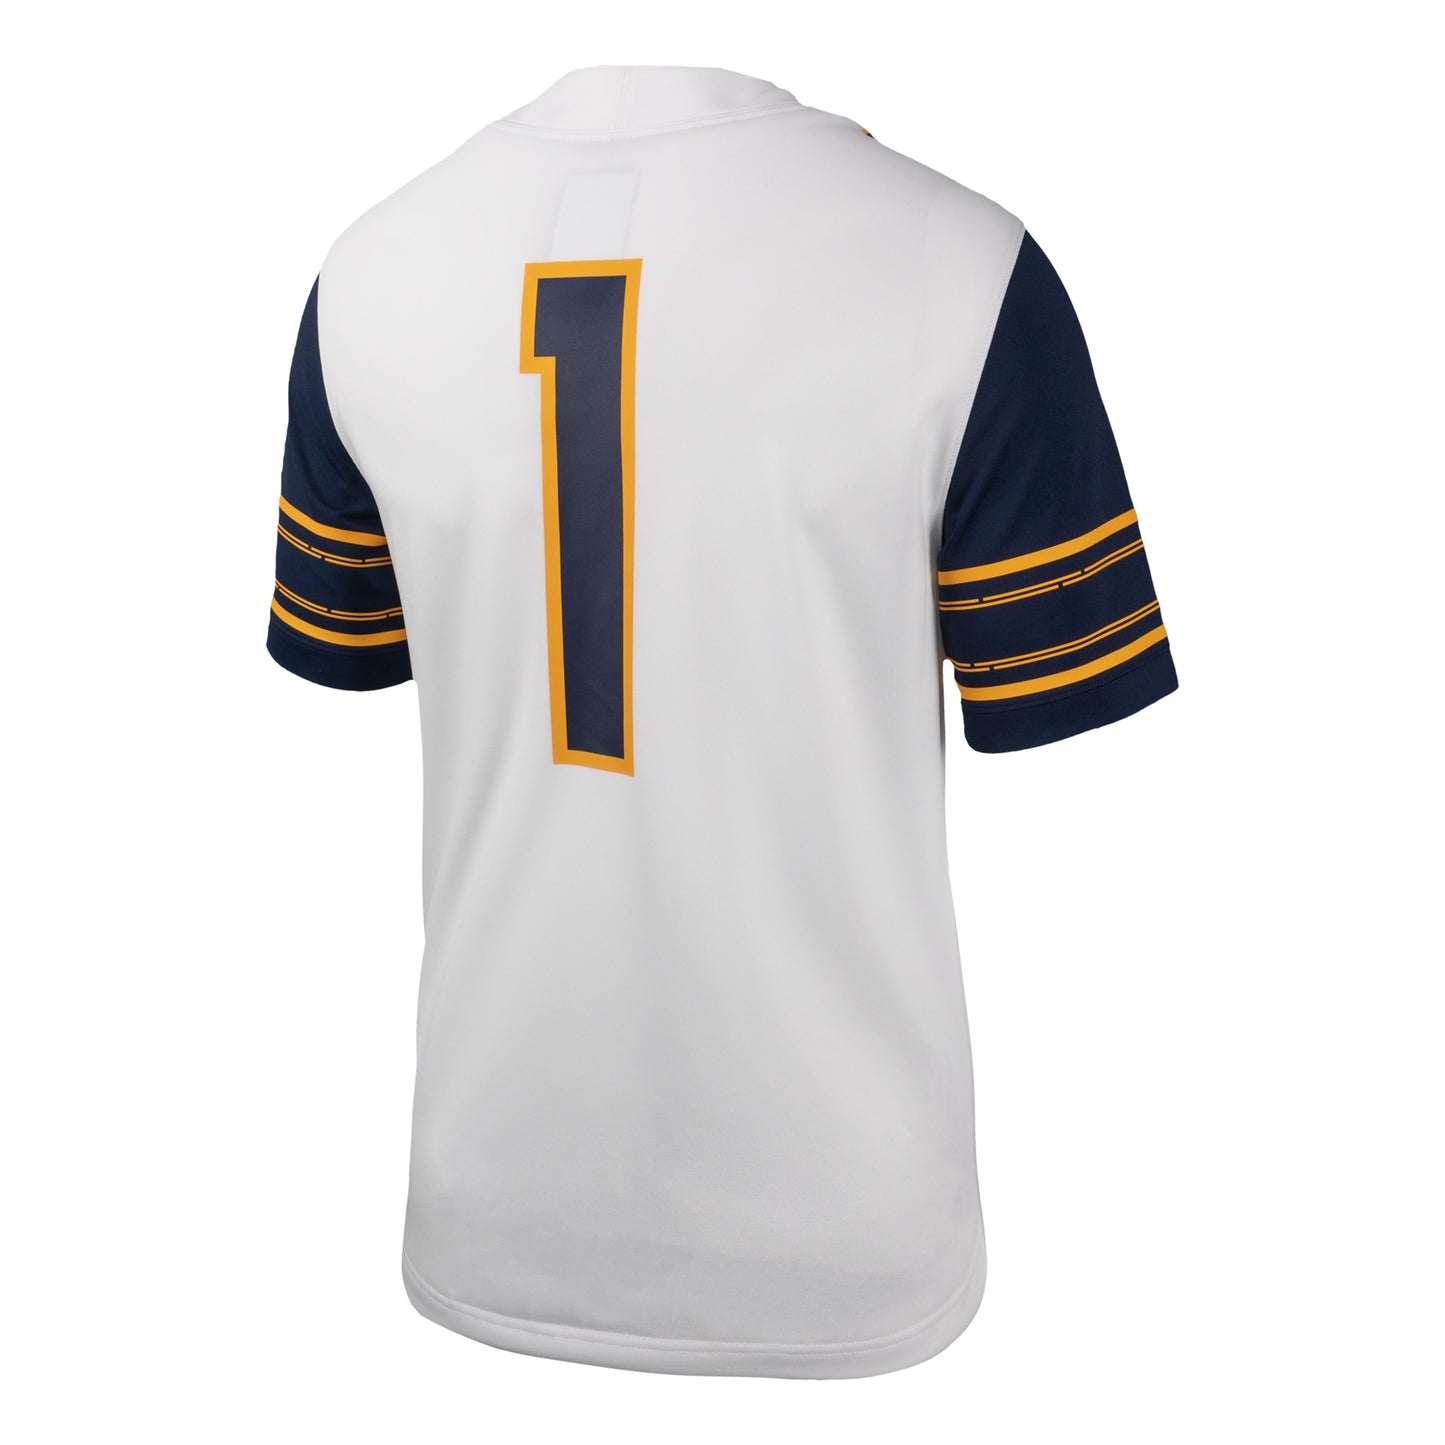 University of California Berkeley Cal Nike football jersey-White-Shop College Wear